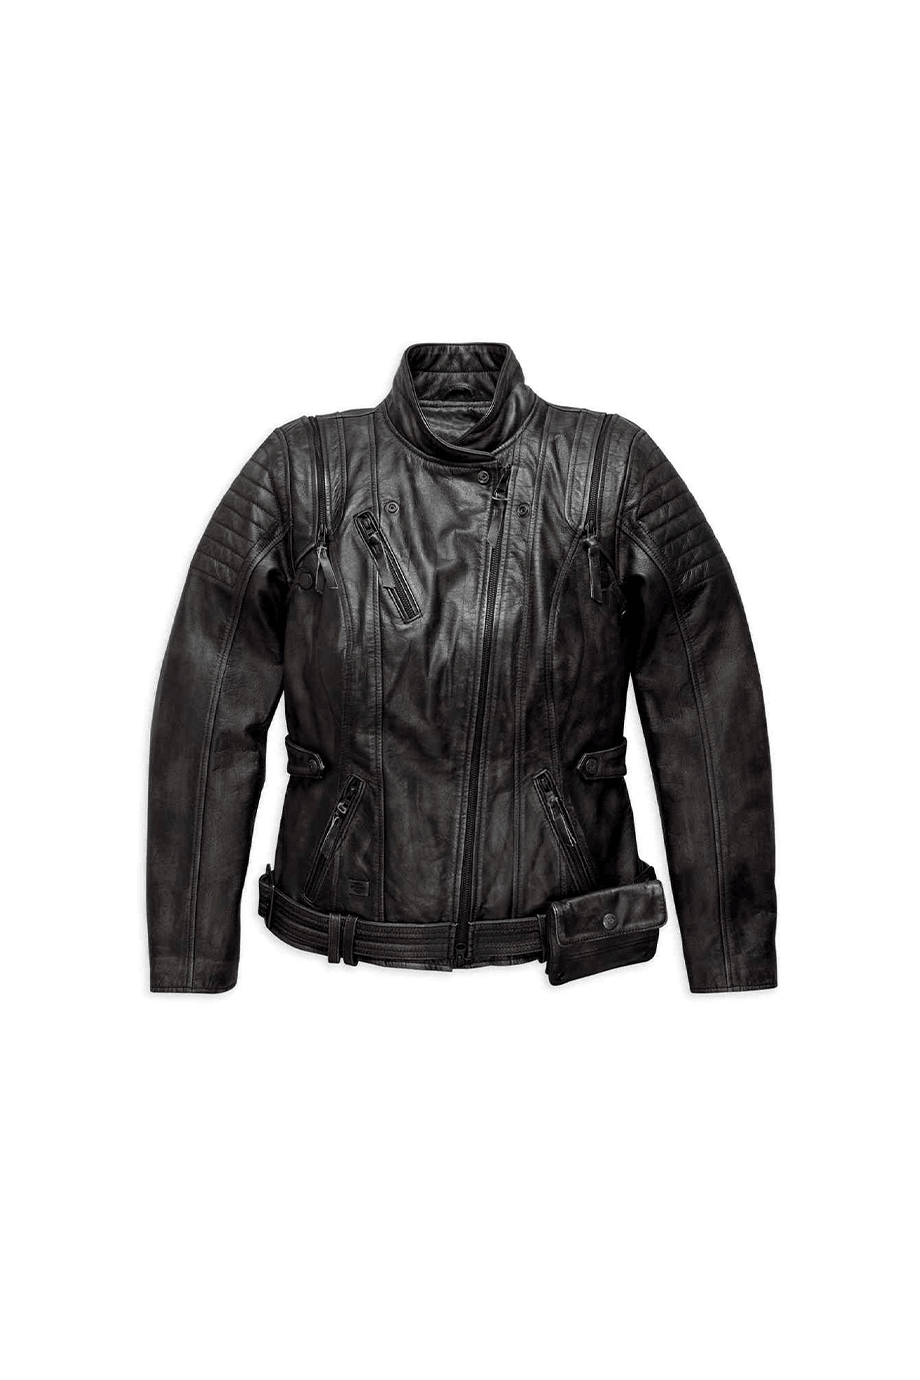 Harley-Davidson® Women's Brava Convertible Leather Jacket